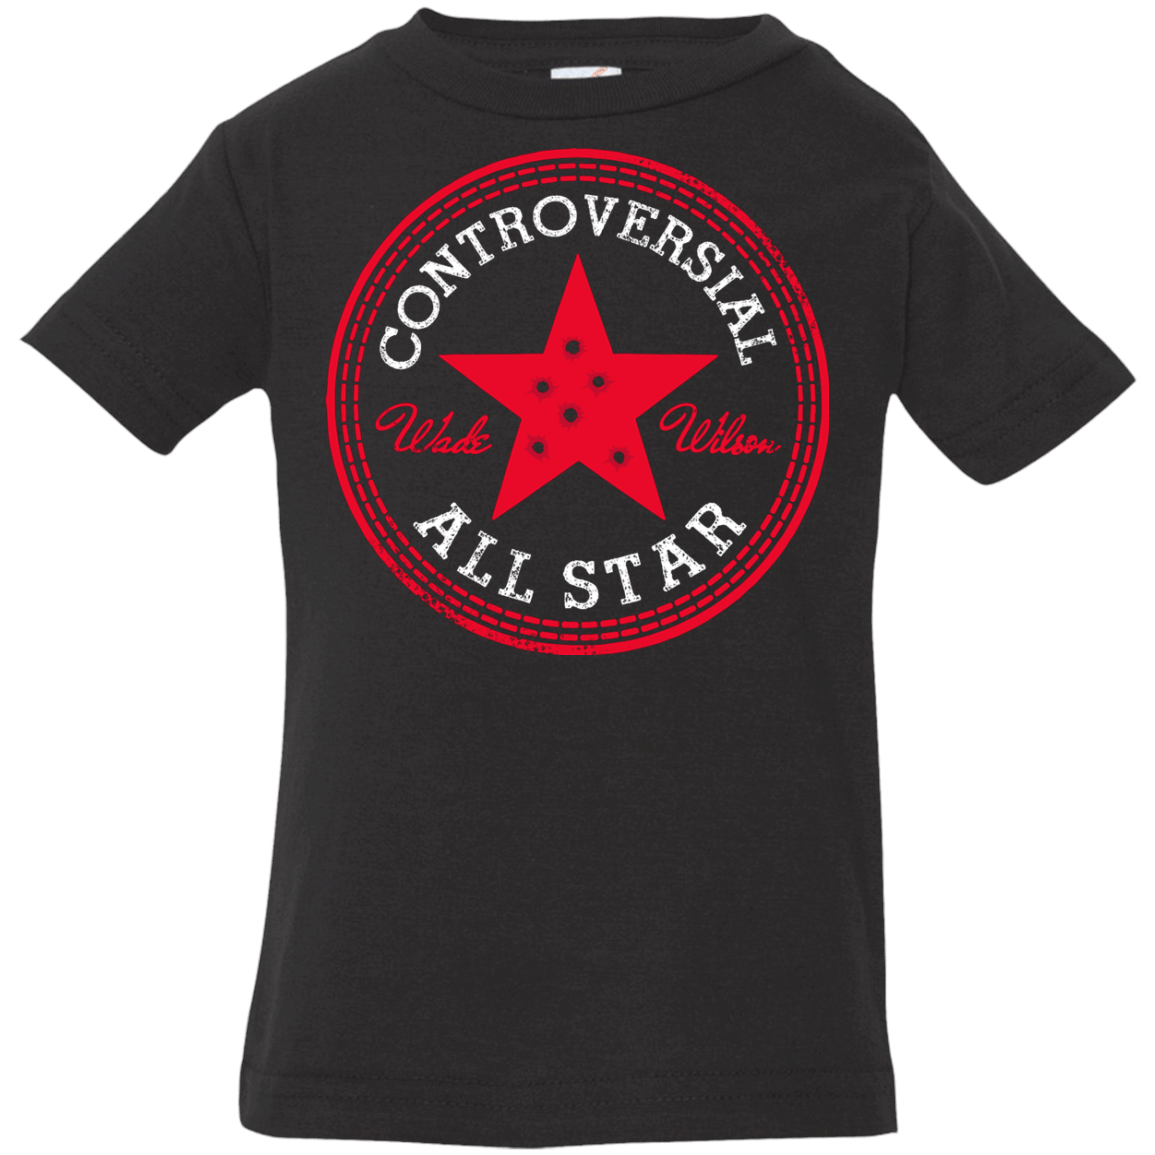 T-Shirts Black / 6 Months All Star Infant Premium T-Shirt